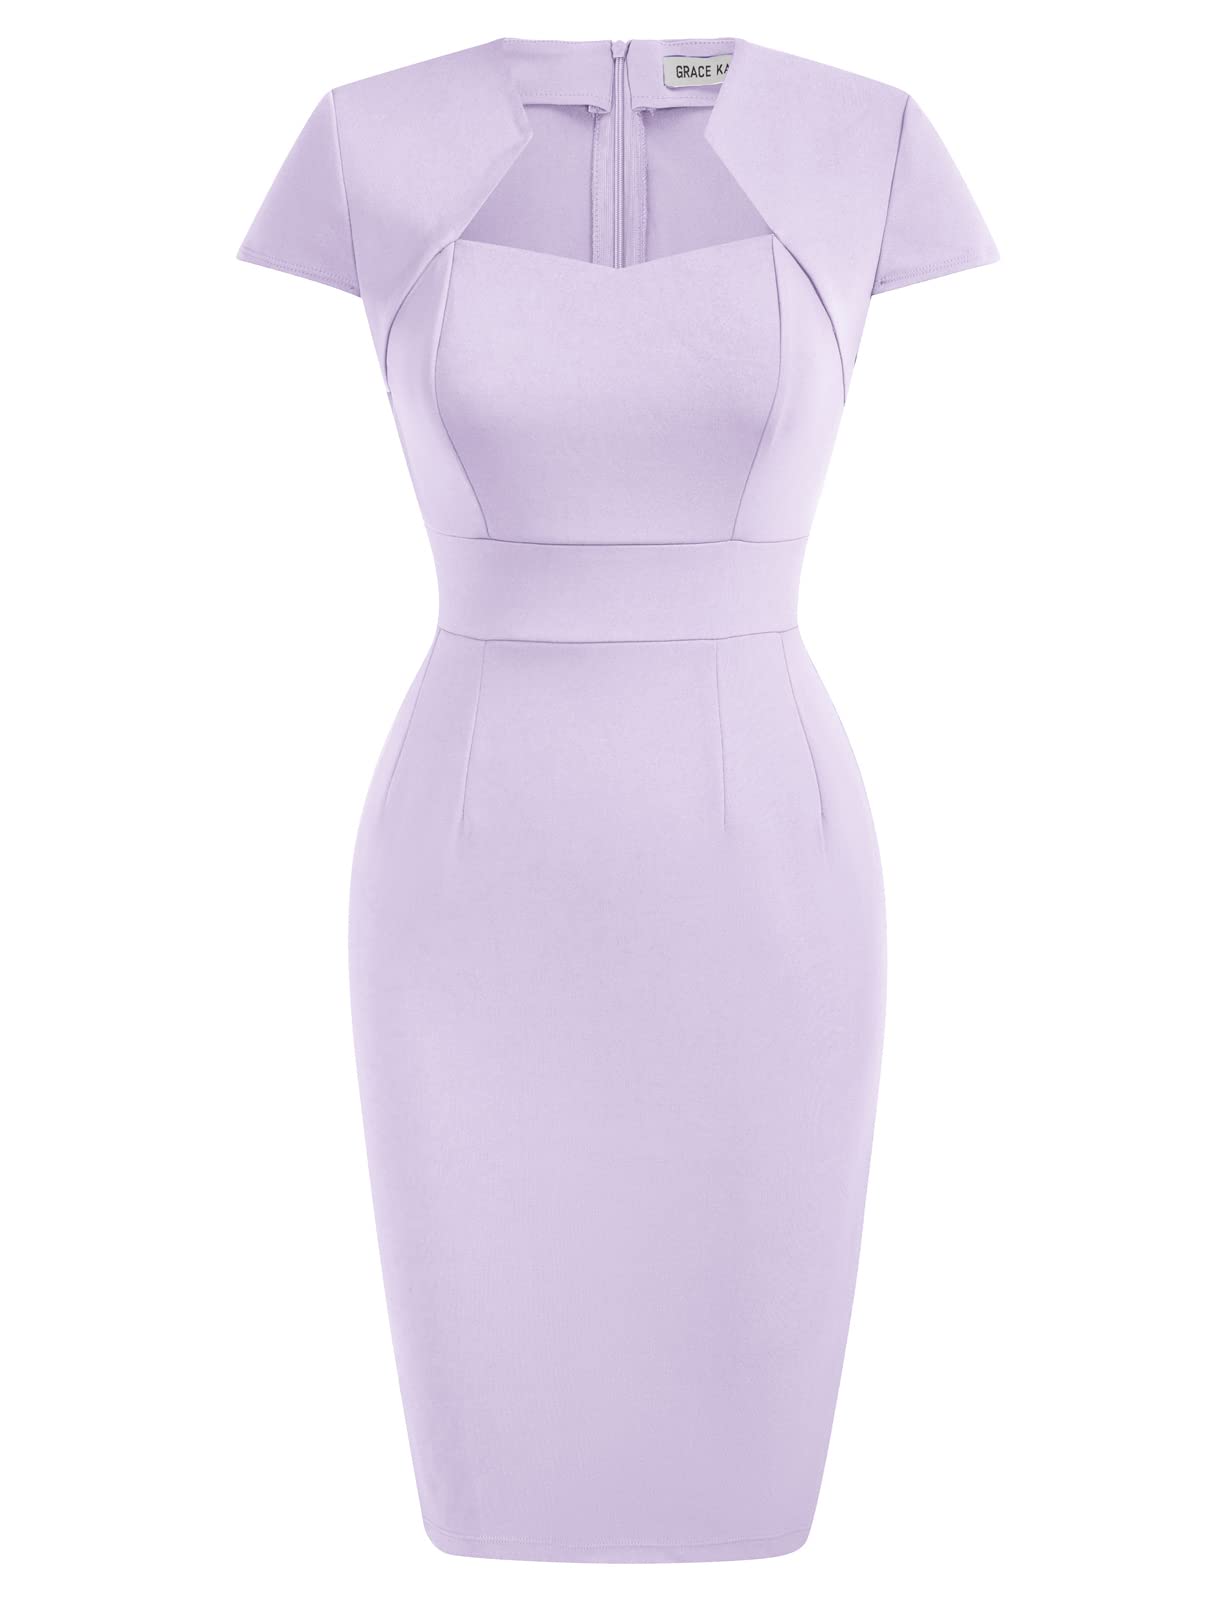 GRACE KARIN Womens Vintage Cap Sleeve Bodycon Knee-Length Pencil Dress for Party Prom Light Purple, Medium